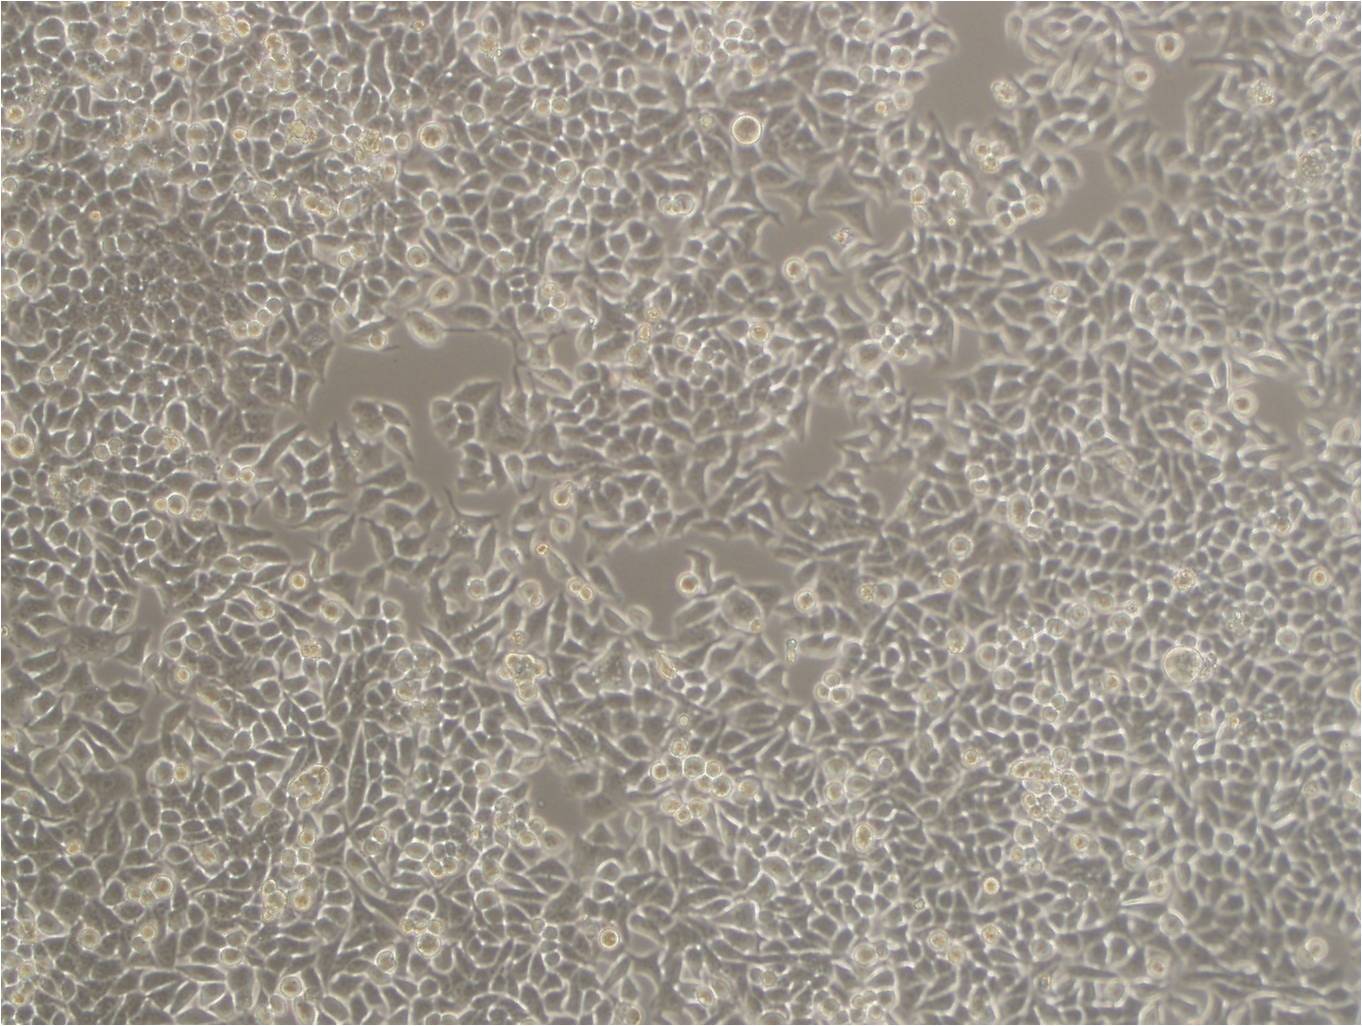 UPCI-SCC-154 epithelioid cells人舌鳞癌细胞系,UPCI-SCC-154 epithelioid cells